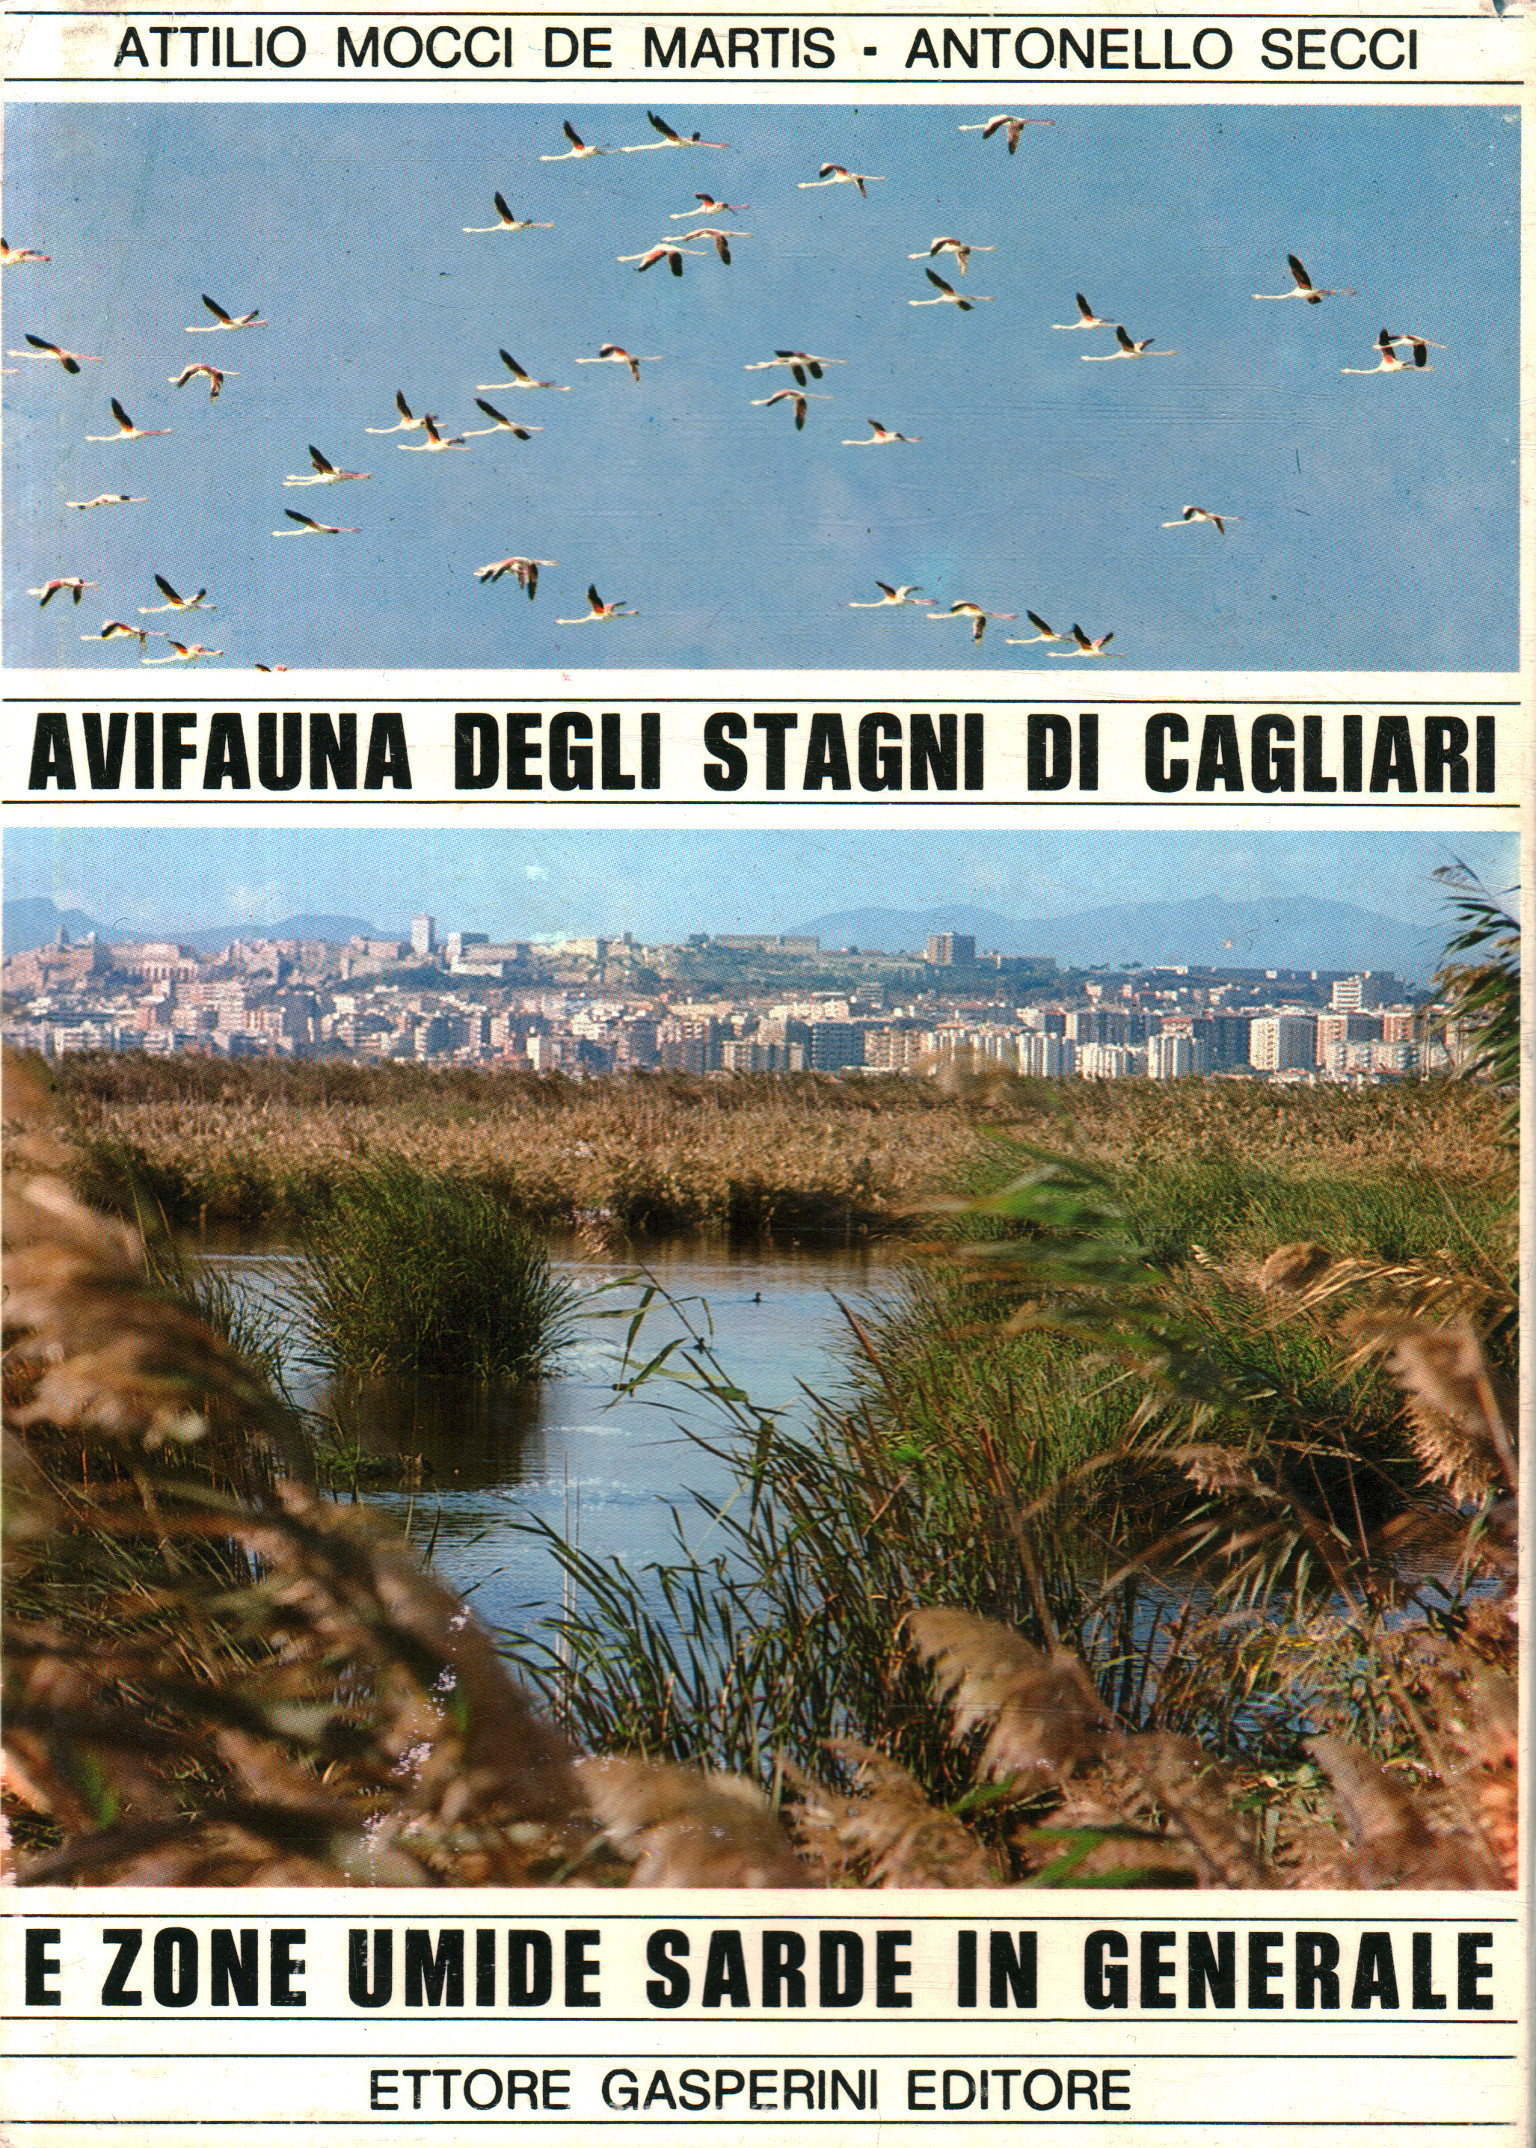 Avifauna of the ponds of Cagliari and zo